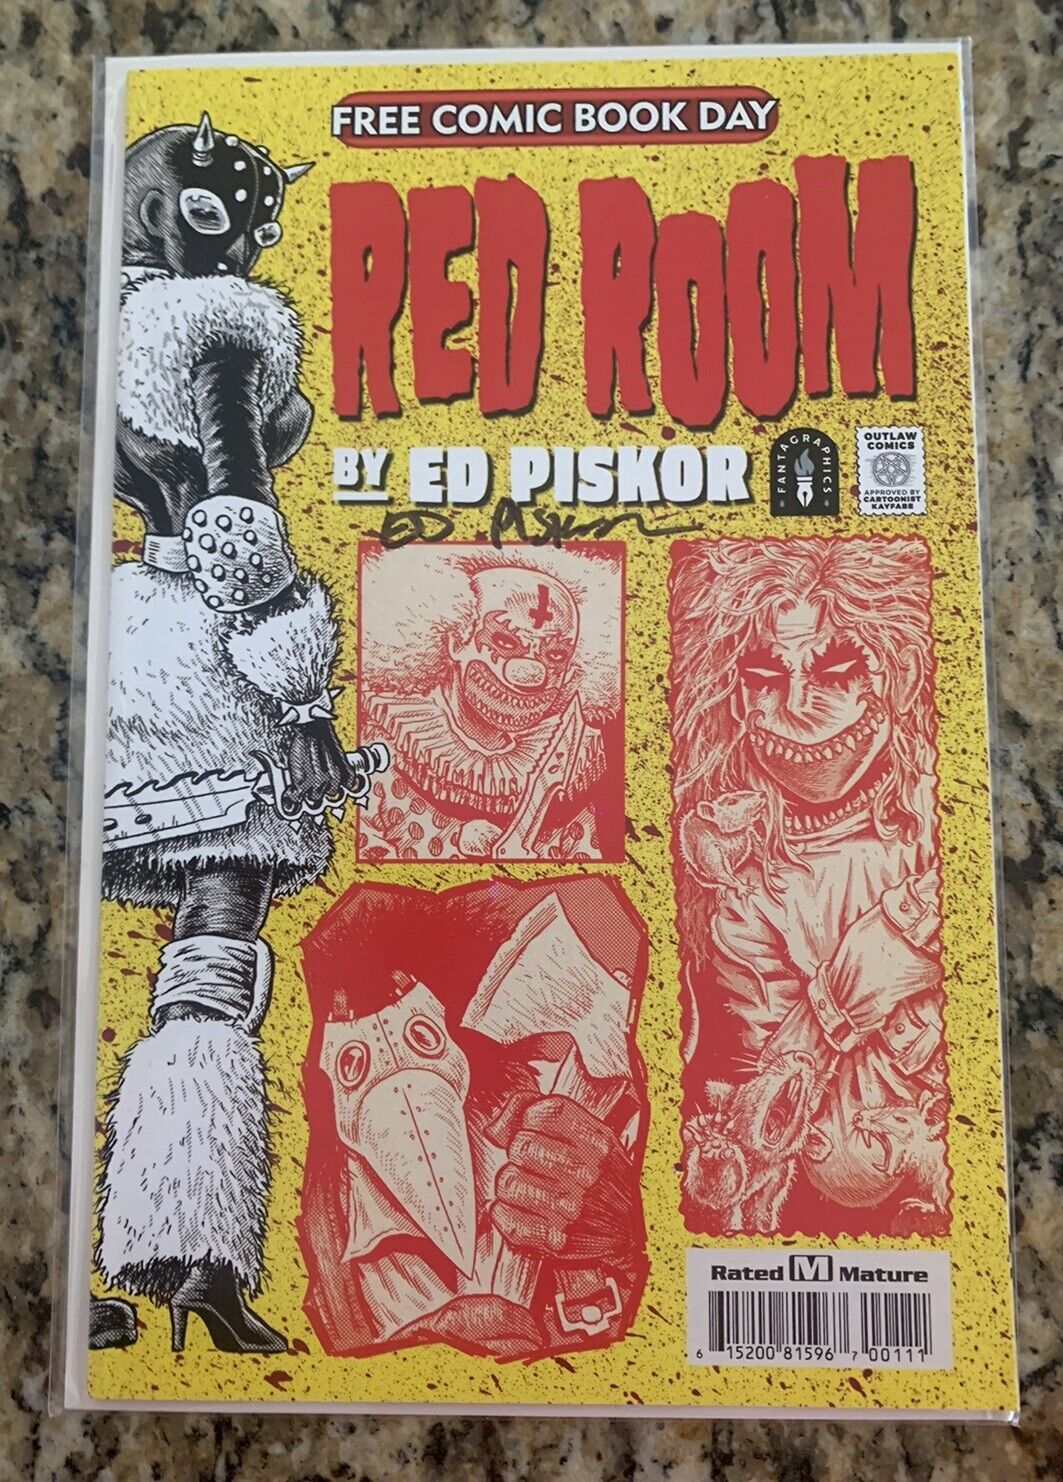 Red Room Free Comic Book Day Edition #1 - FANTAGRAPHICS - Signed Ed PISKOR